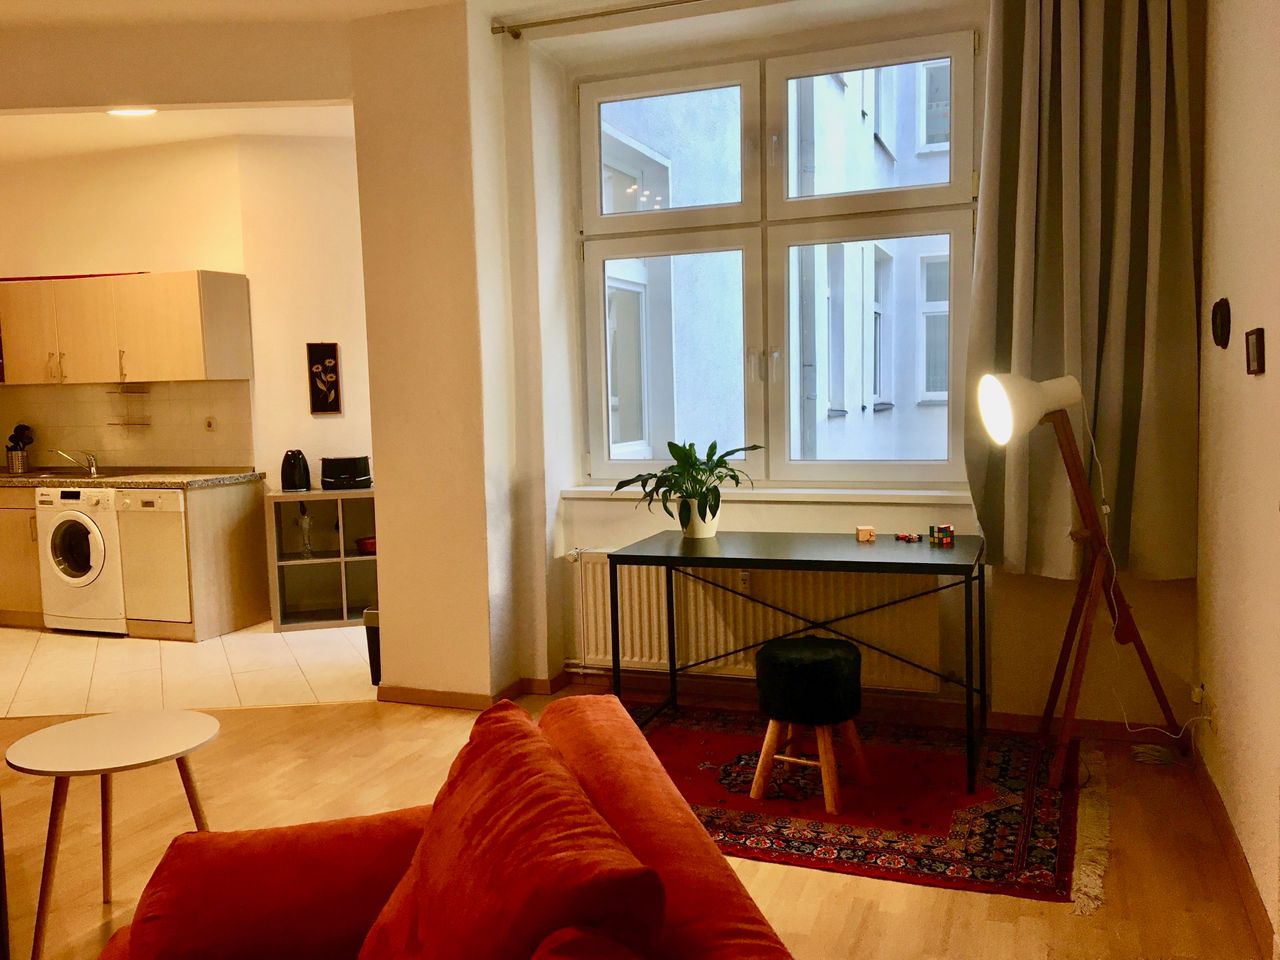 'Gina' - beautiful, renovated old building apartment in Prenzlauer Berg